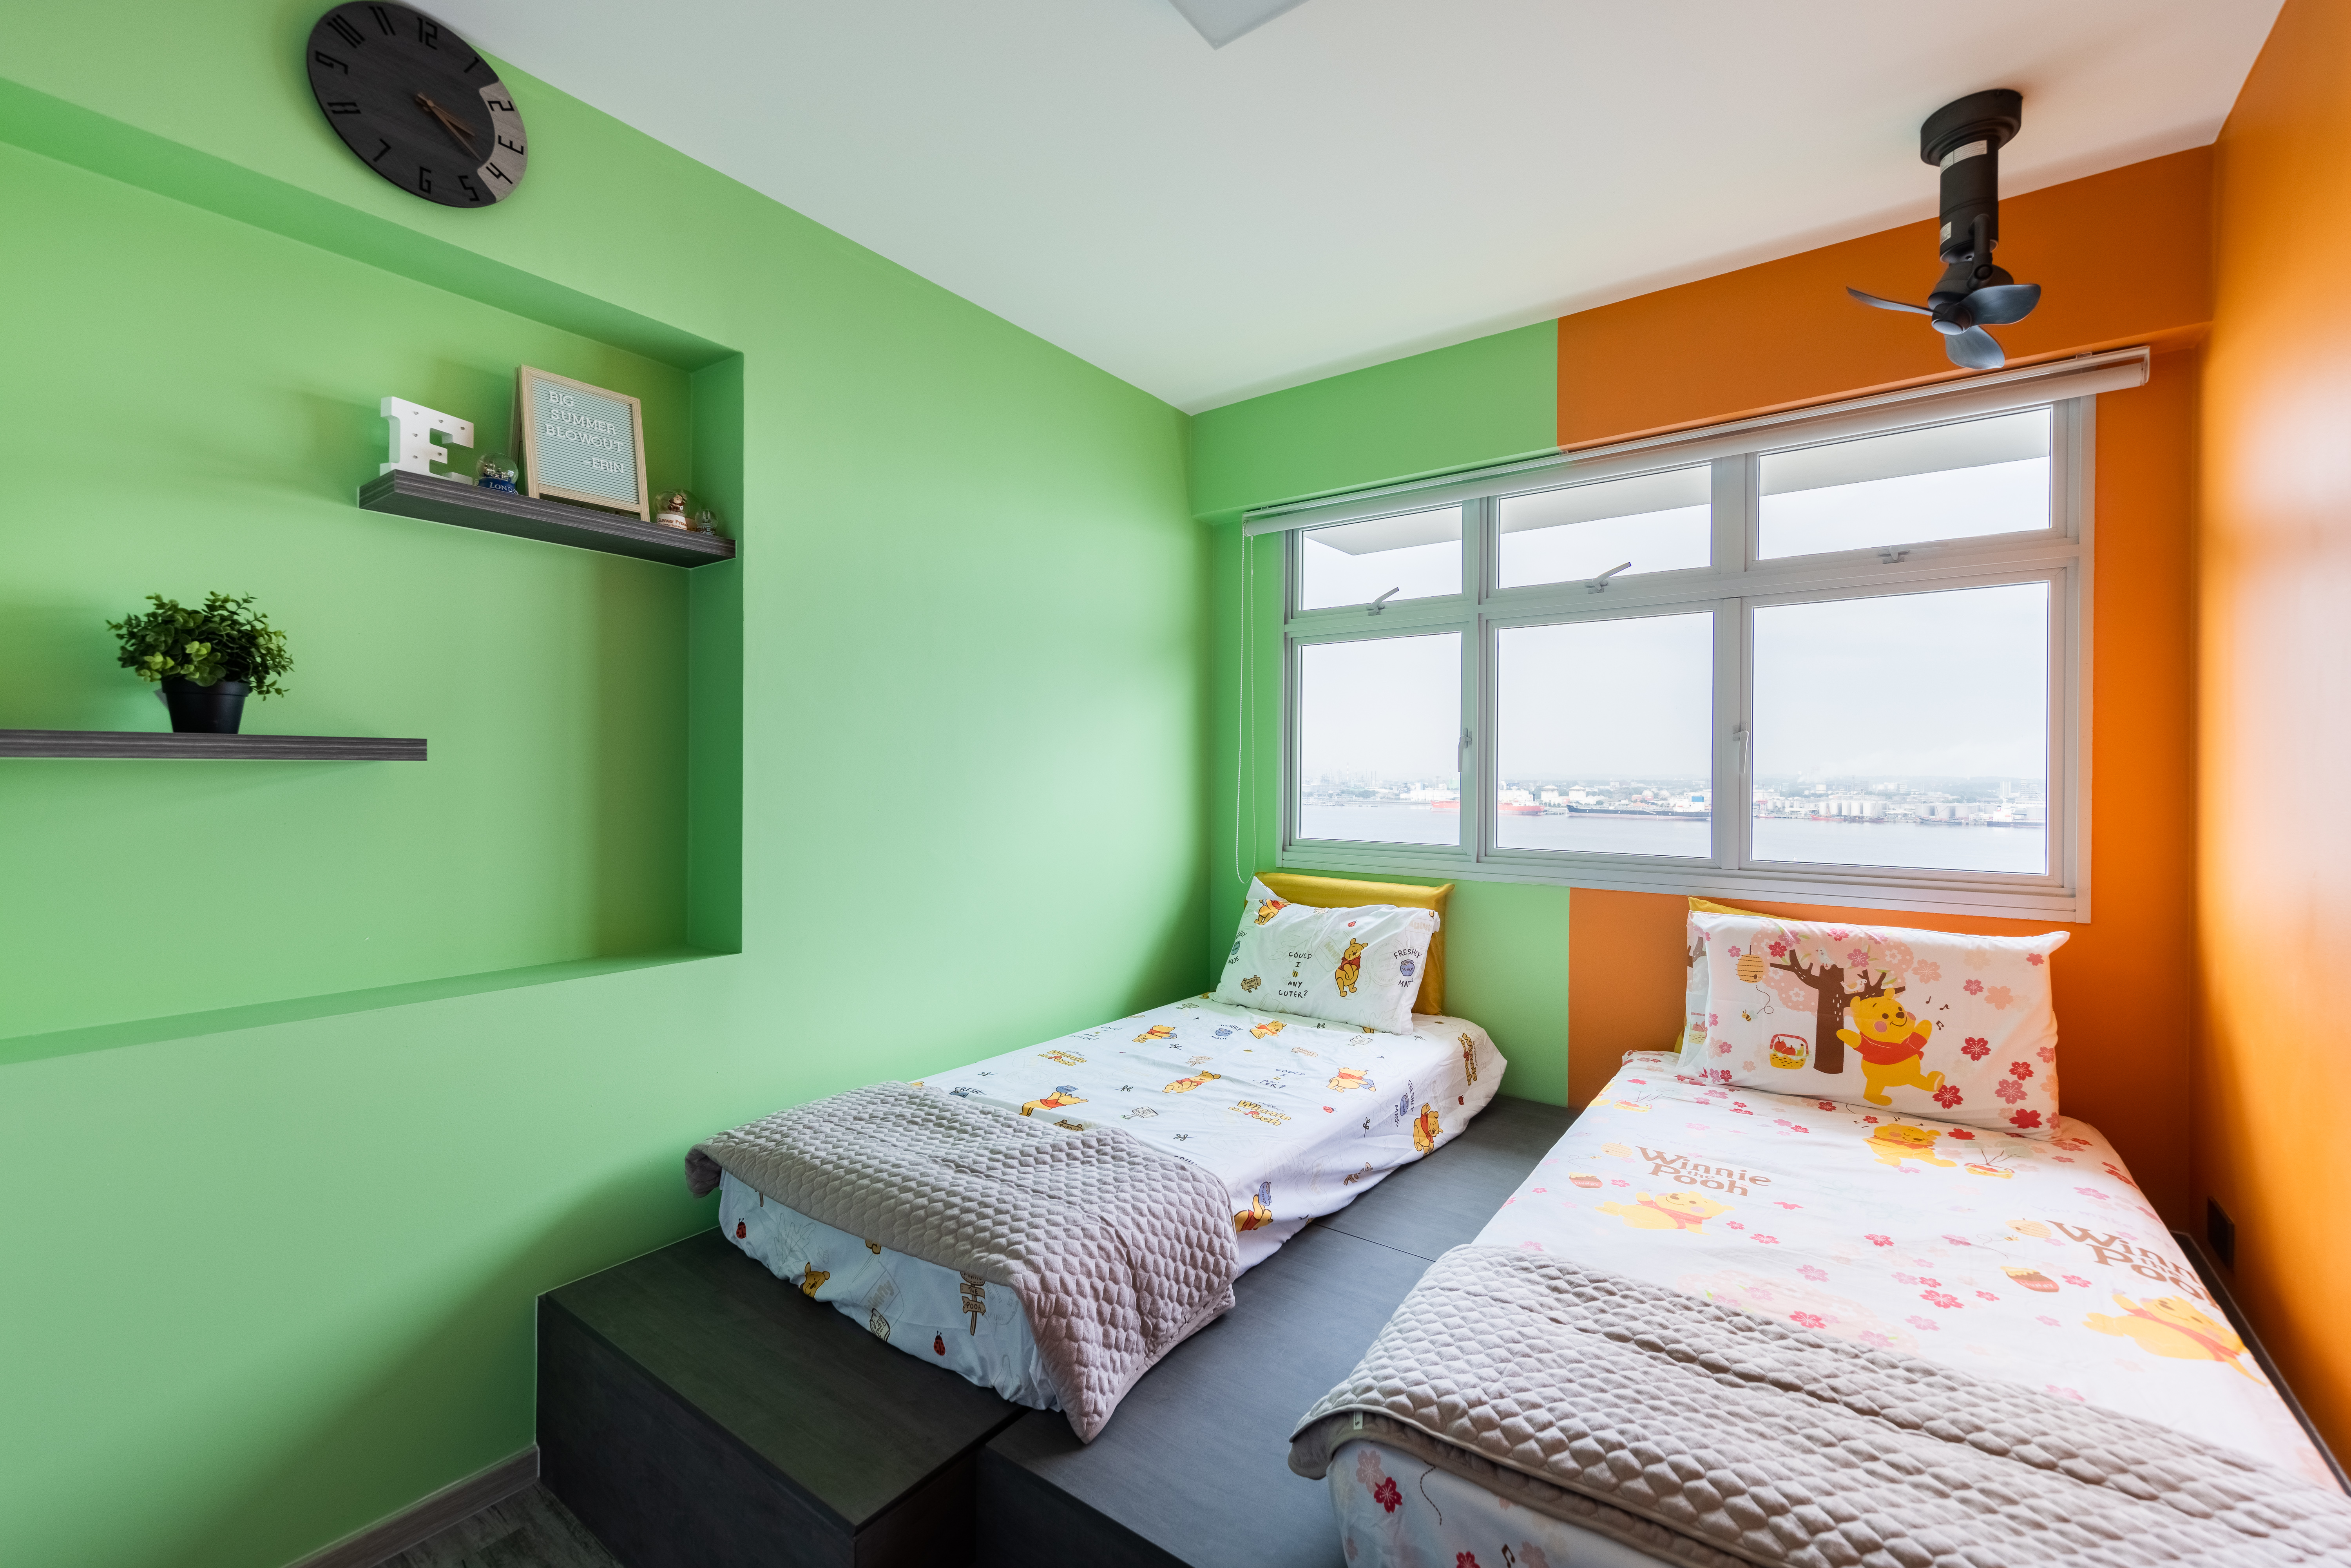 Mediterranean, Modern Design - Bedroom - HDB 5 Room - Design by U-Home Interior Design Pte Ltd